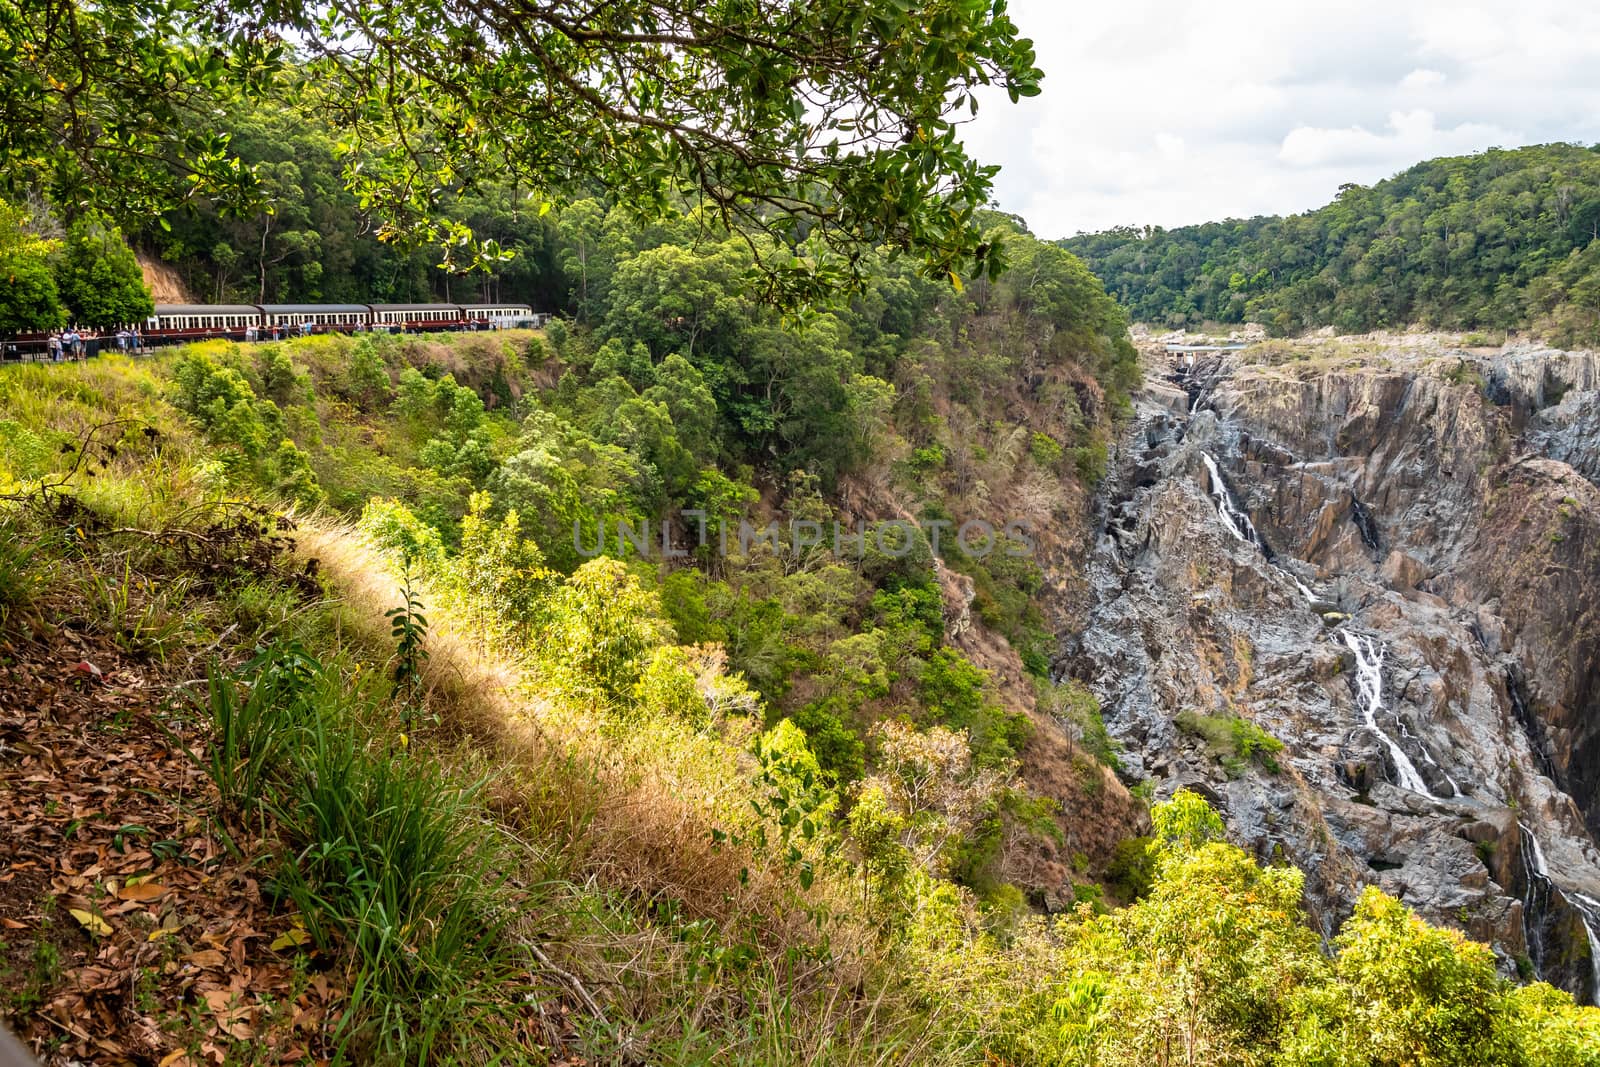 View of the Barron Falls near Kuranda from the train viewpoint by mauricallari